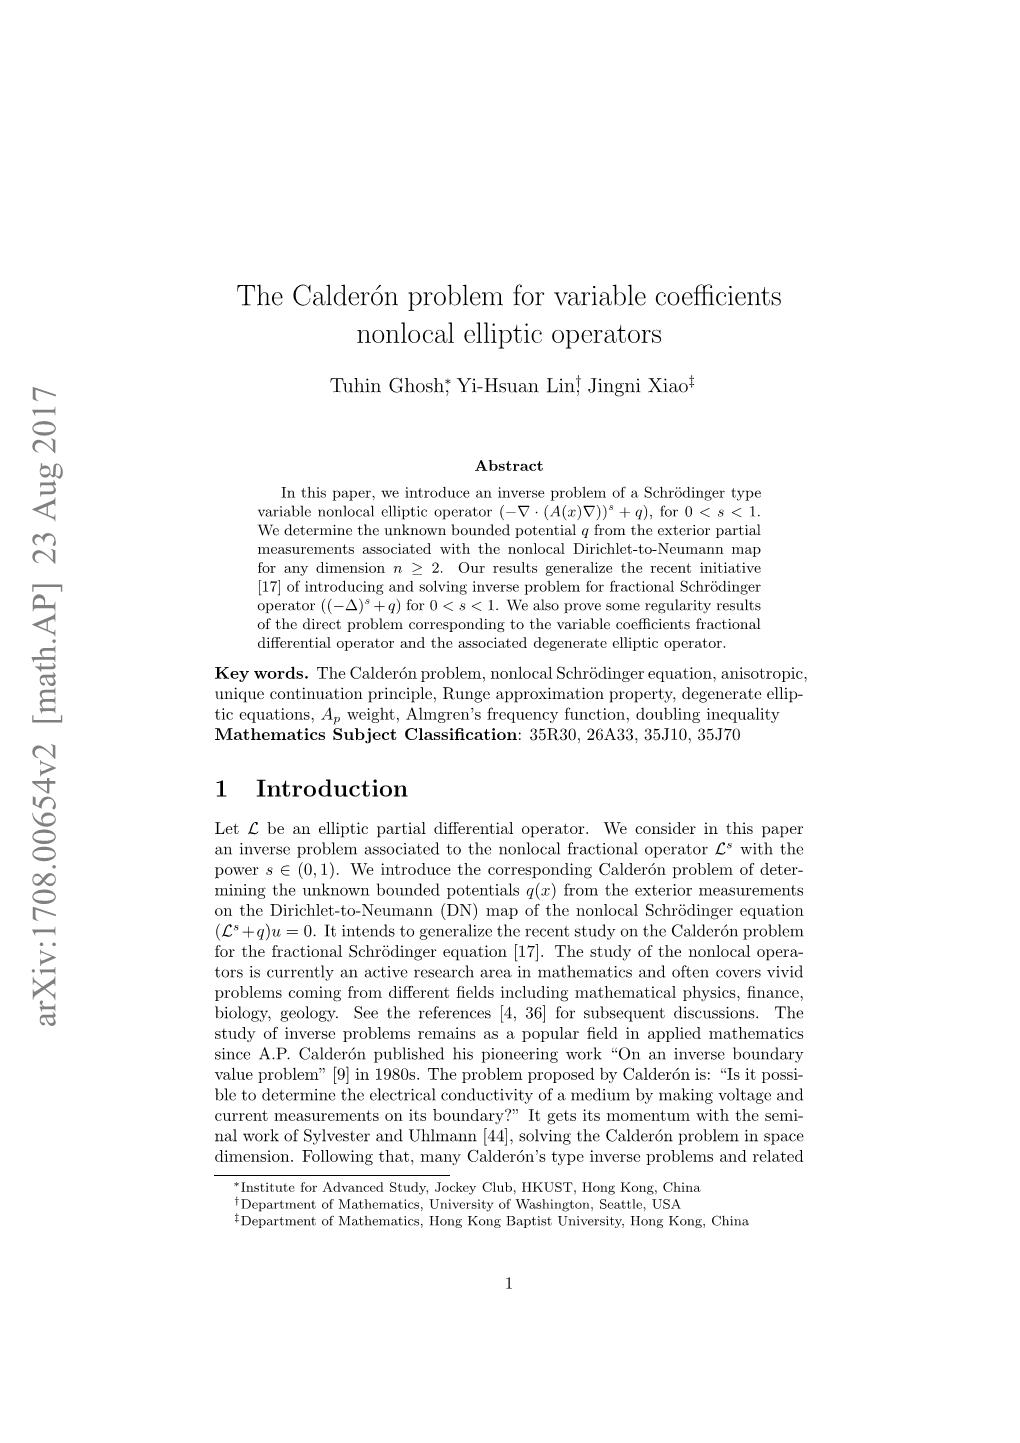 The Calderón Problem for Variable Coefficients Nonlocal Elliptic Operators